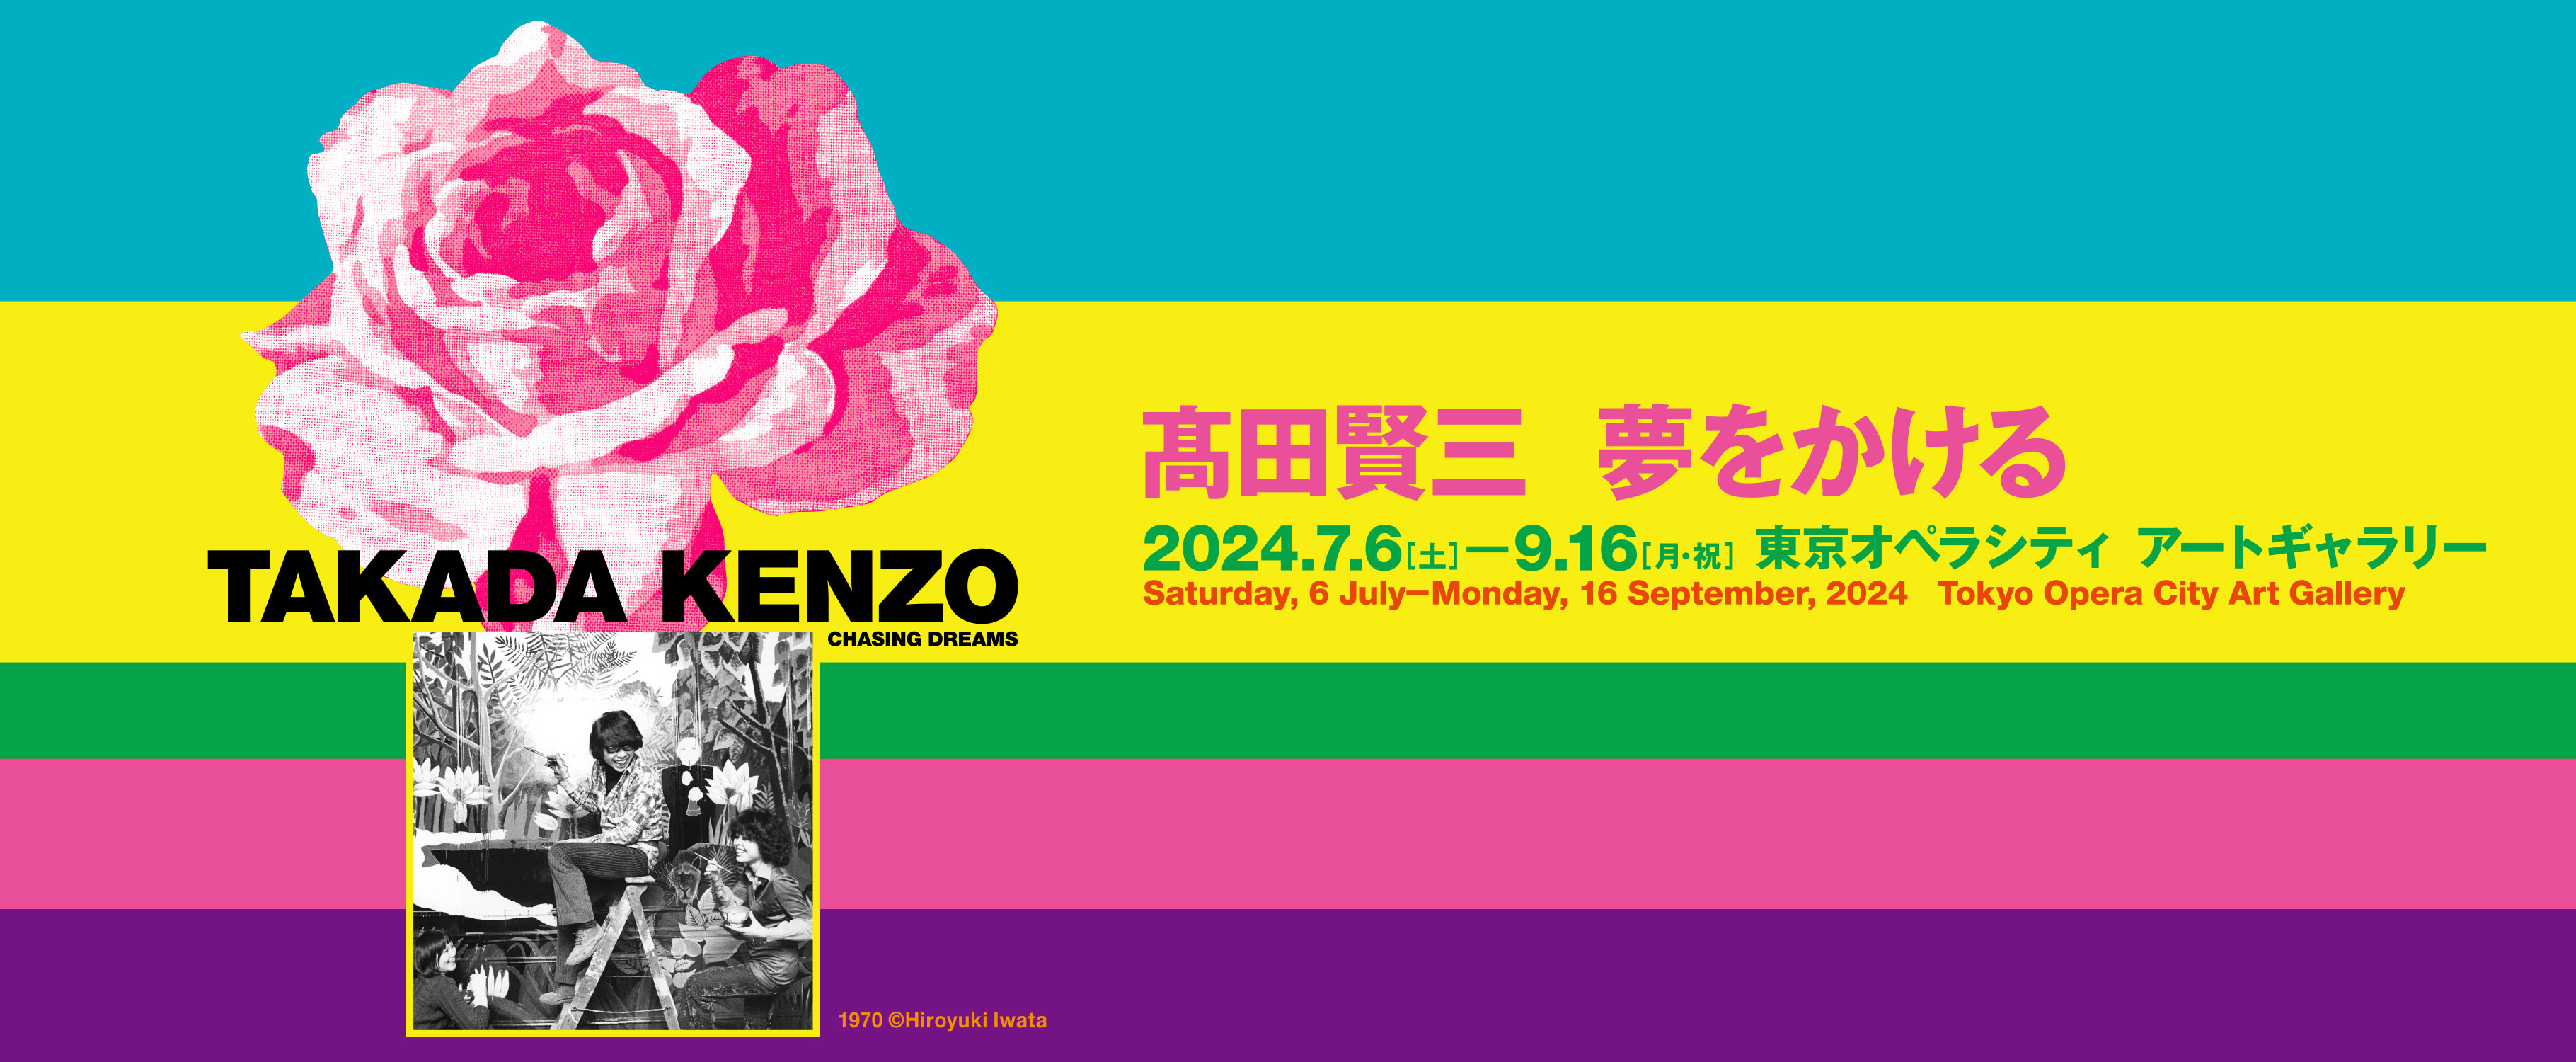 ATAKADA KENZO CHASING FREAMS 2024.7.6-9.16